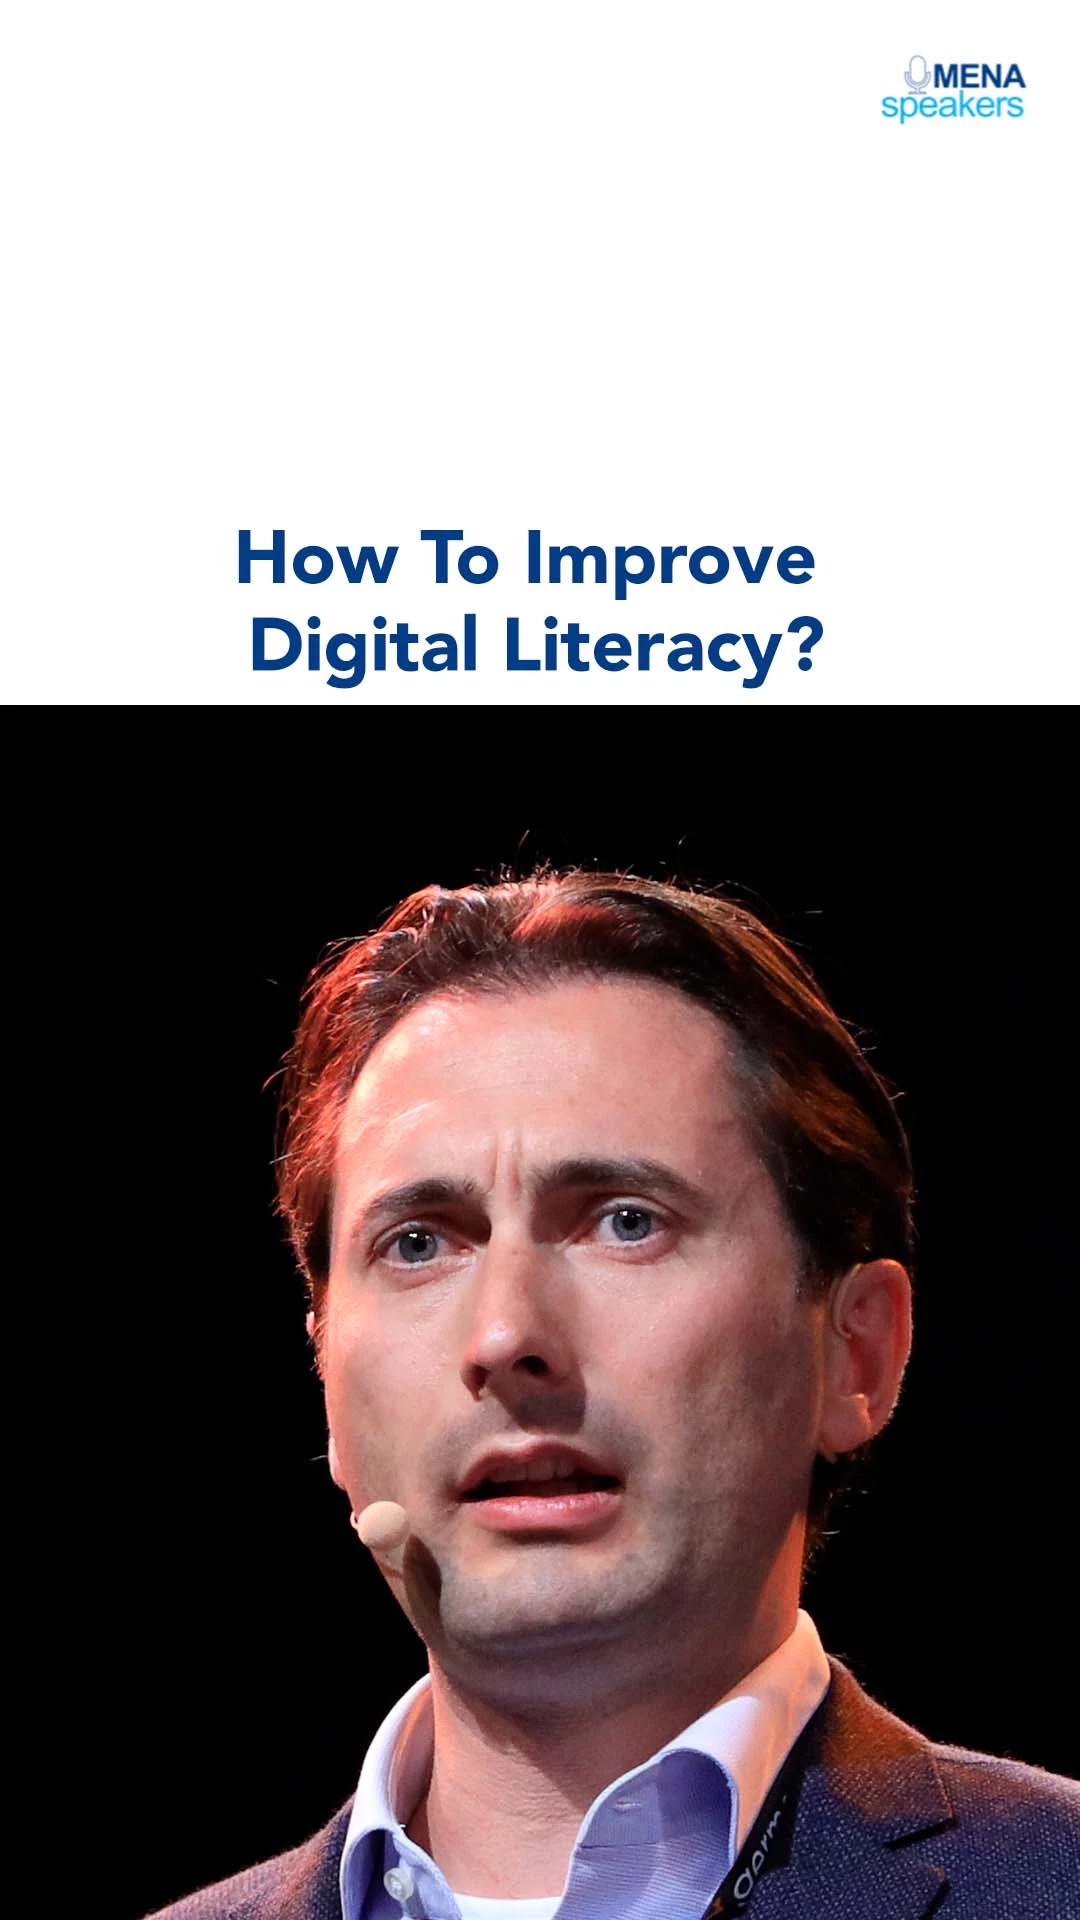 Dr. Mark Van Rijmenam discuss his top tips for improving digital literacy